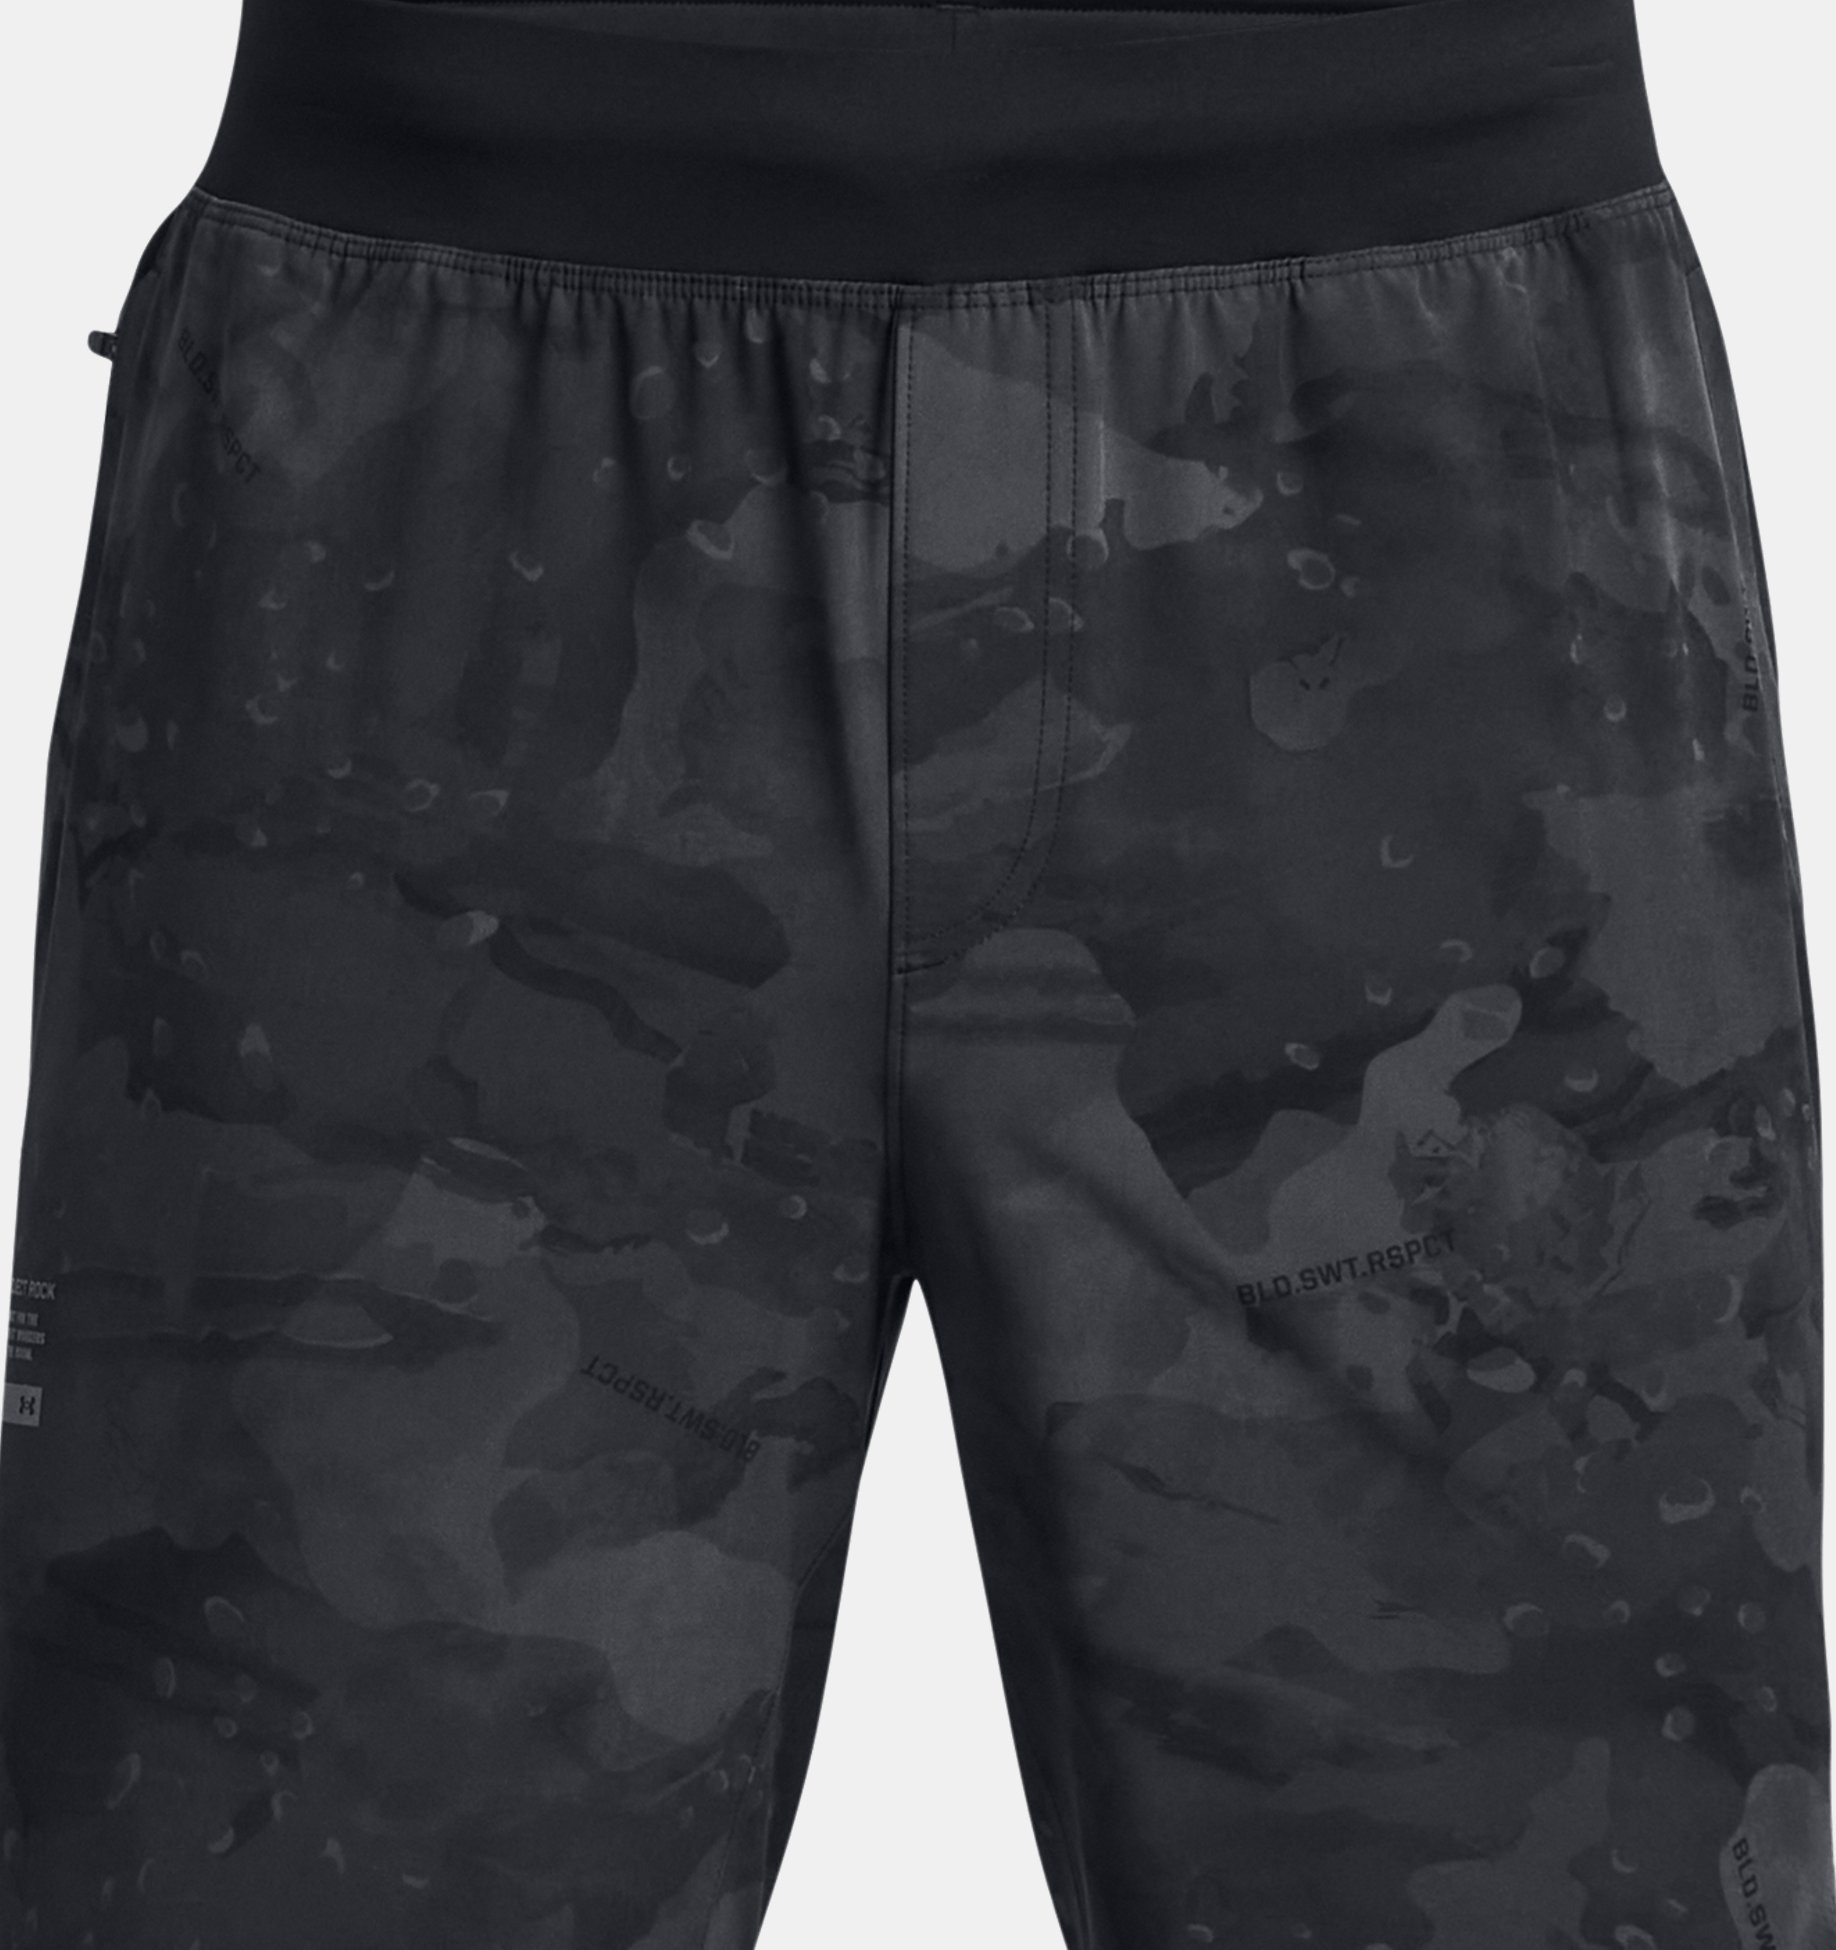 CAMO HQ - New Zealand Disruptive Pattern Material (DPM) CAMO Men's Athletic  Shorts